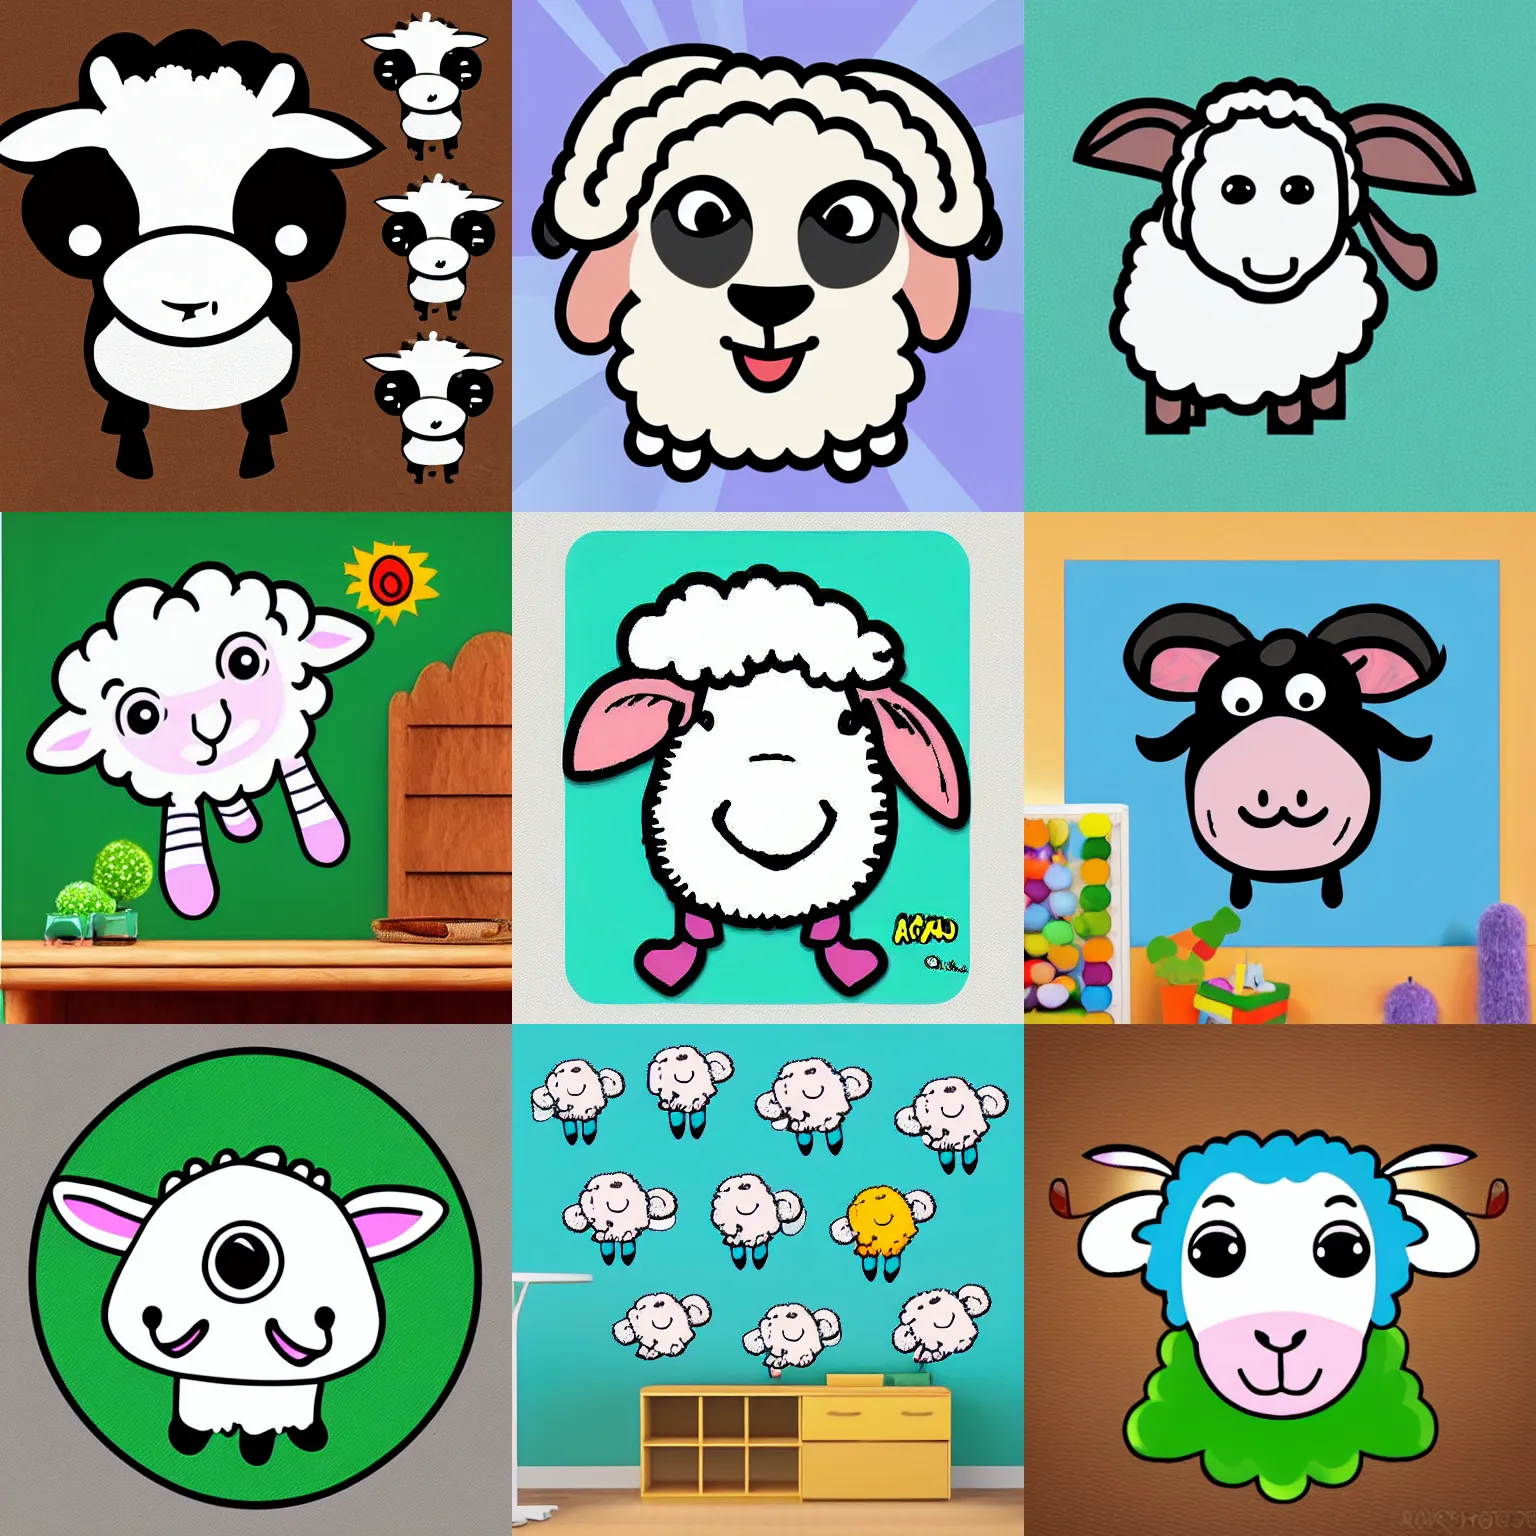 Prompt: adorable sheep art cartoon sticker profile picture